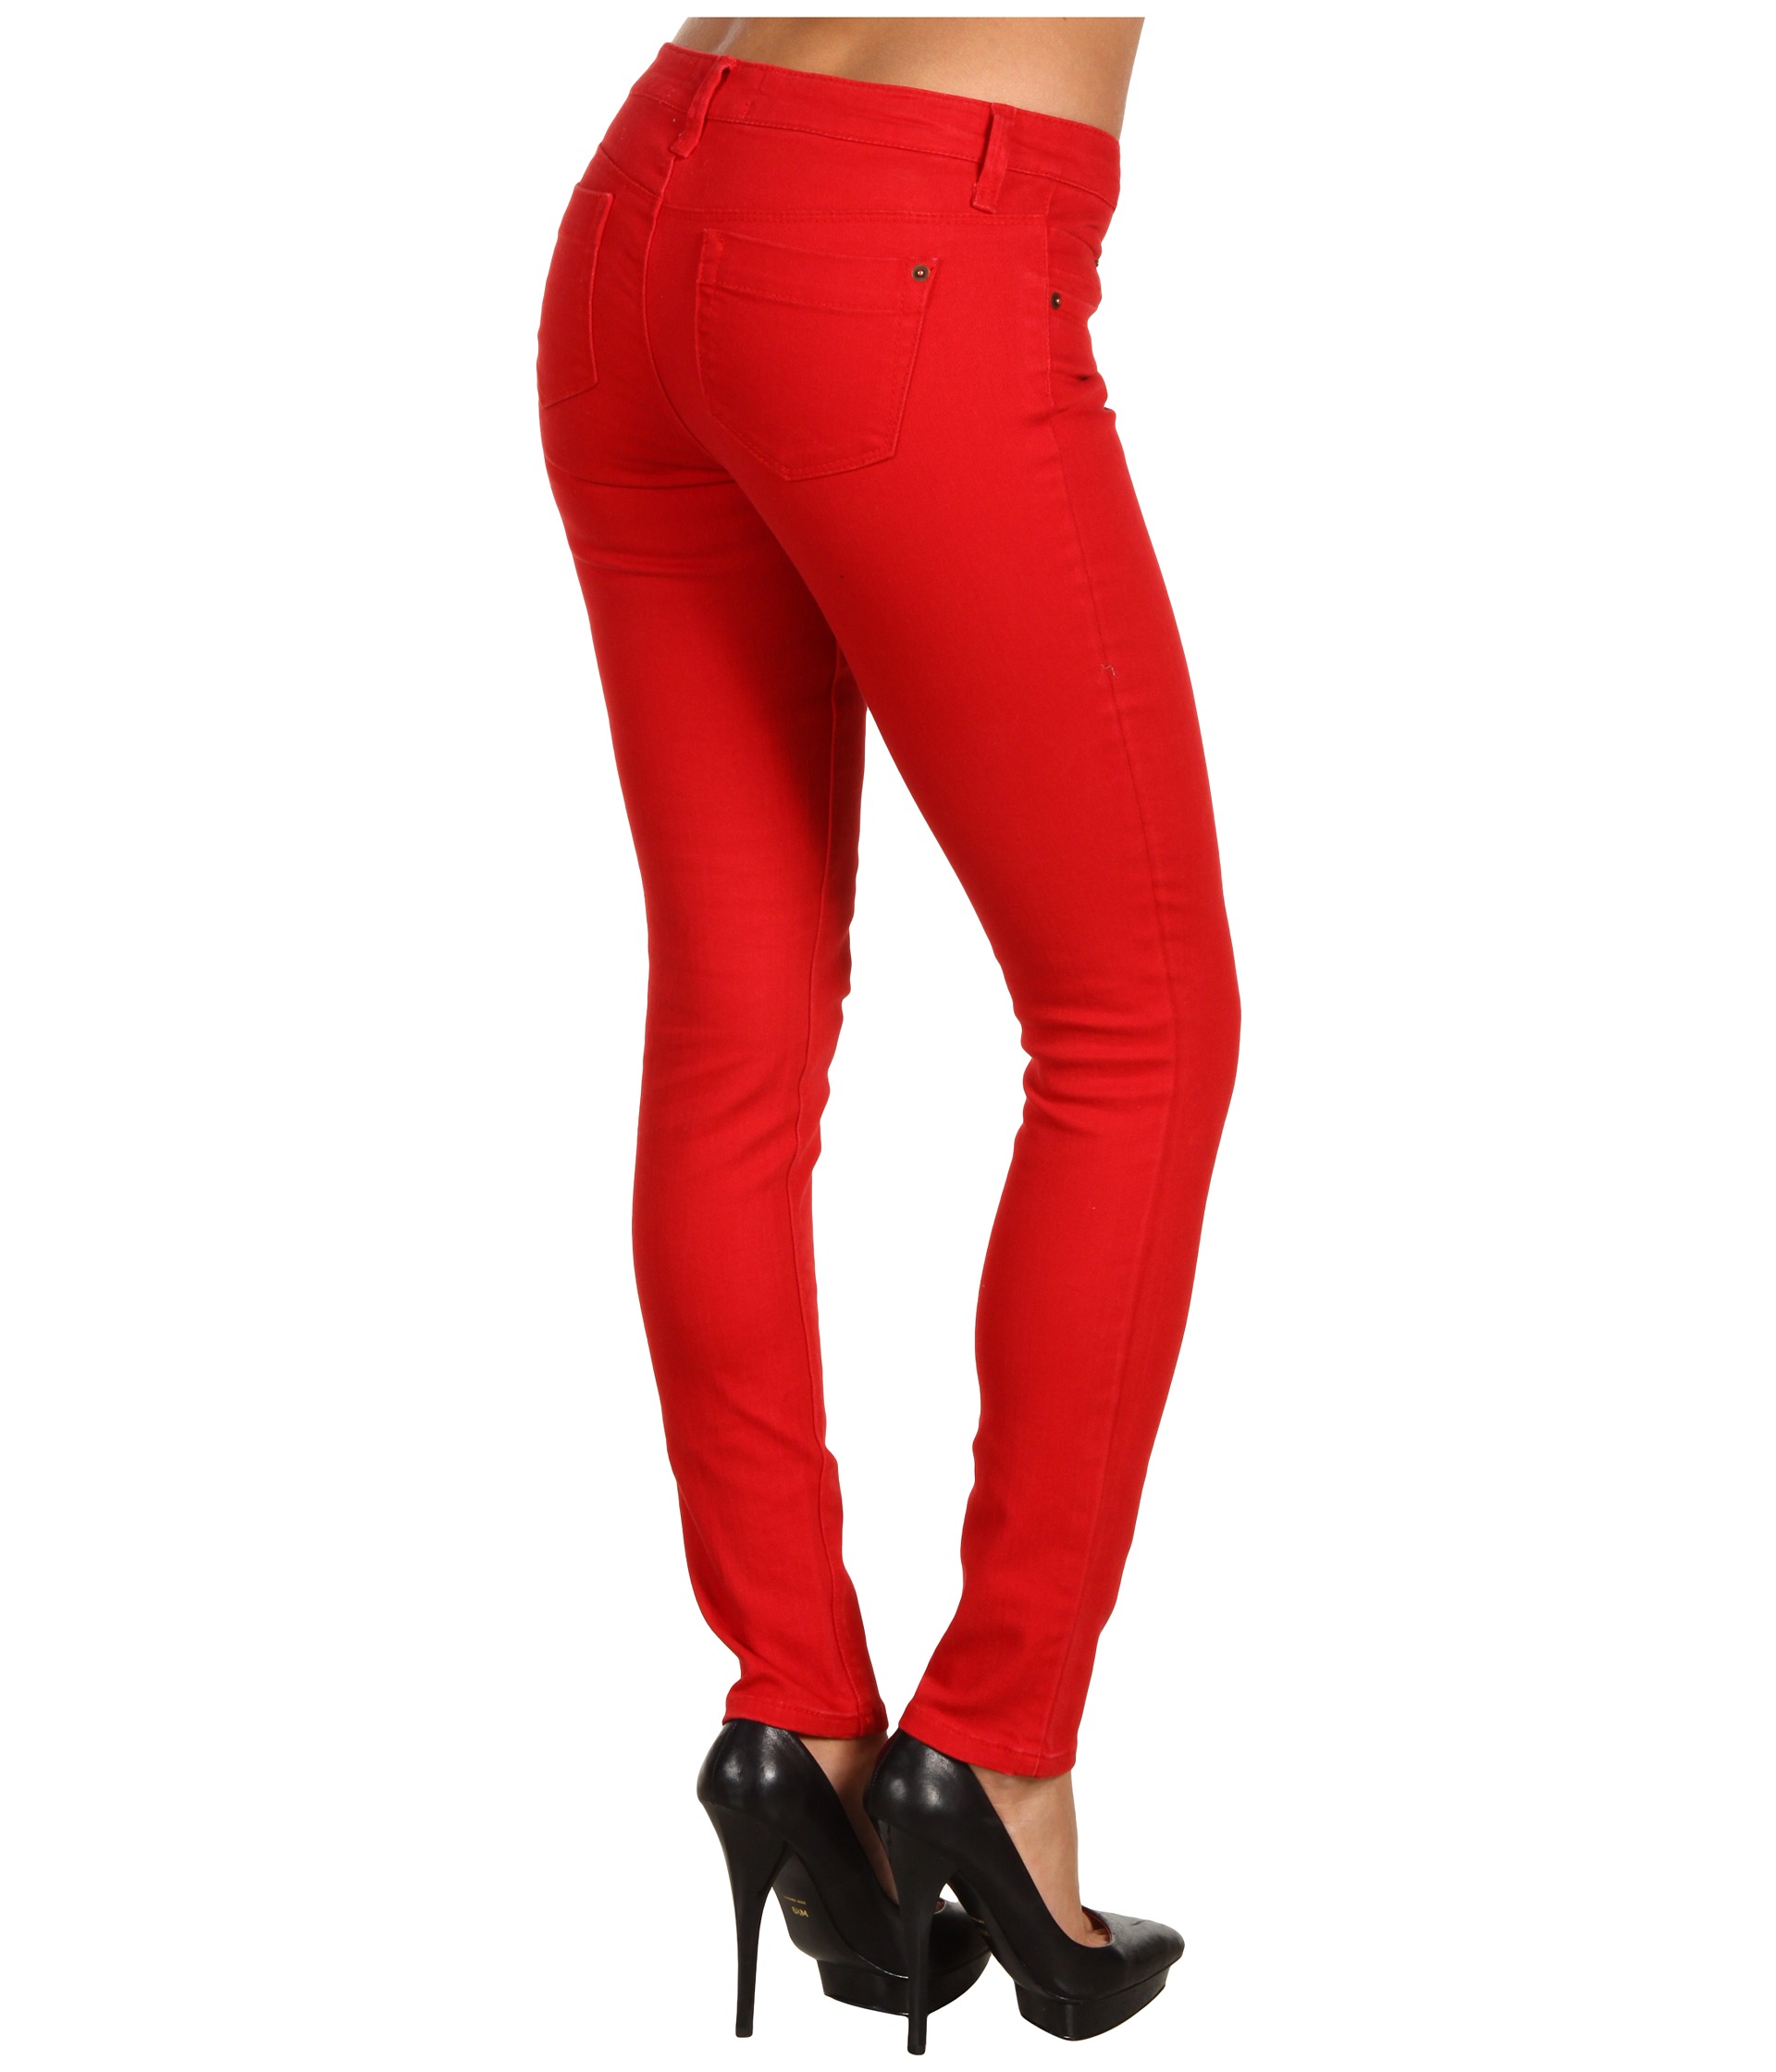 Gabriella Rocha Libbie Jeans $34.99 ( 36% off MSRP $55.00)